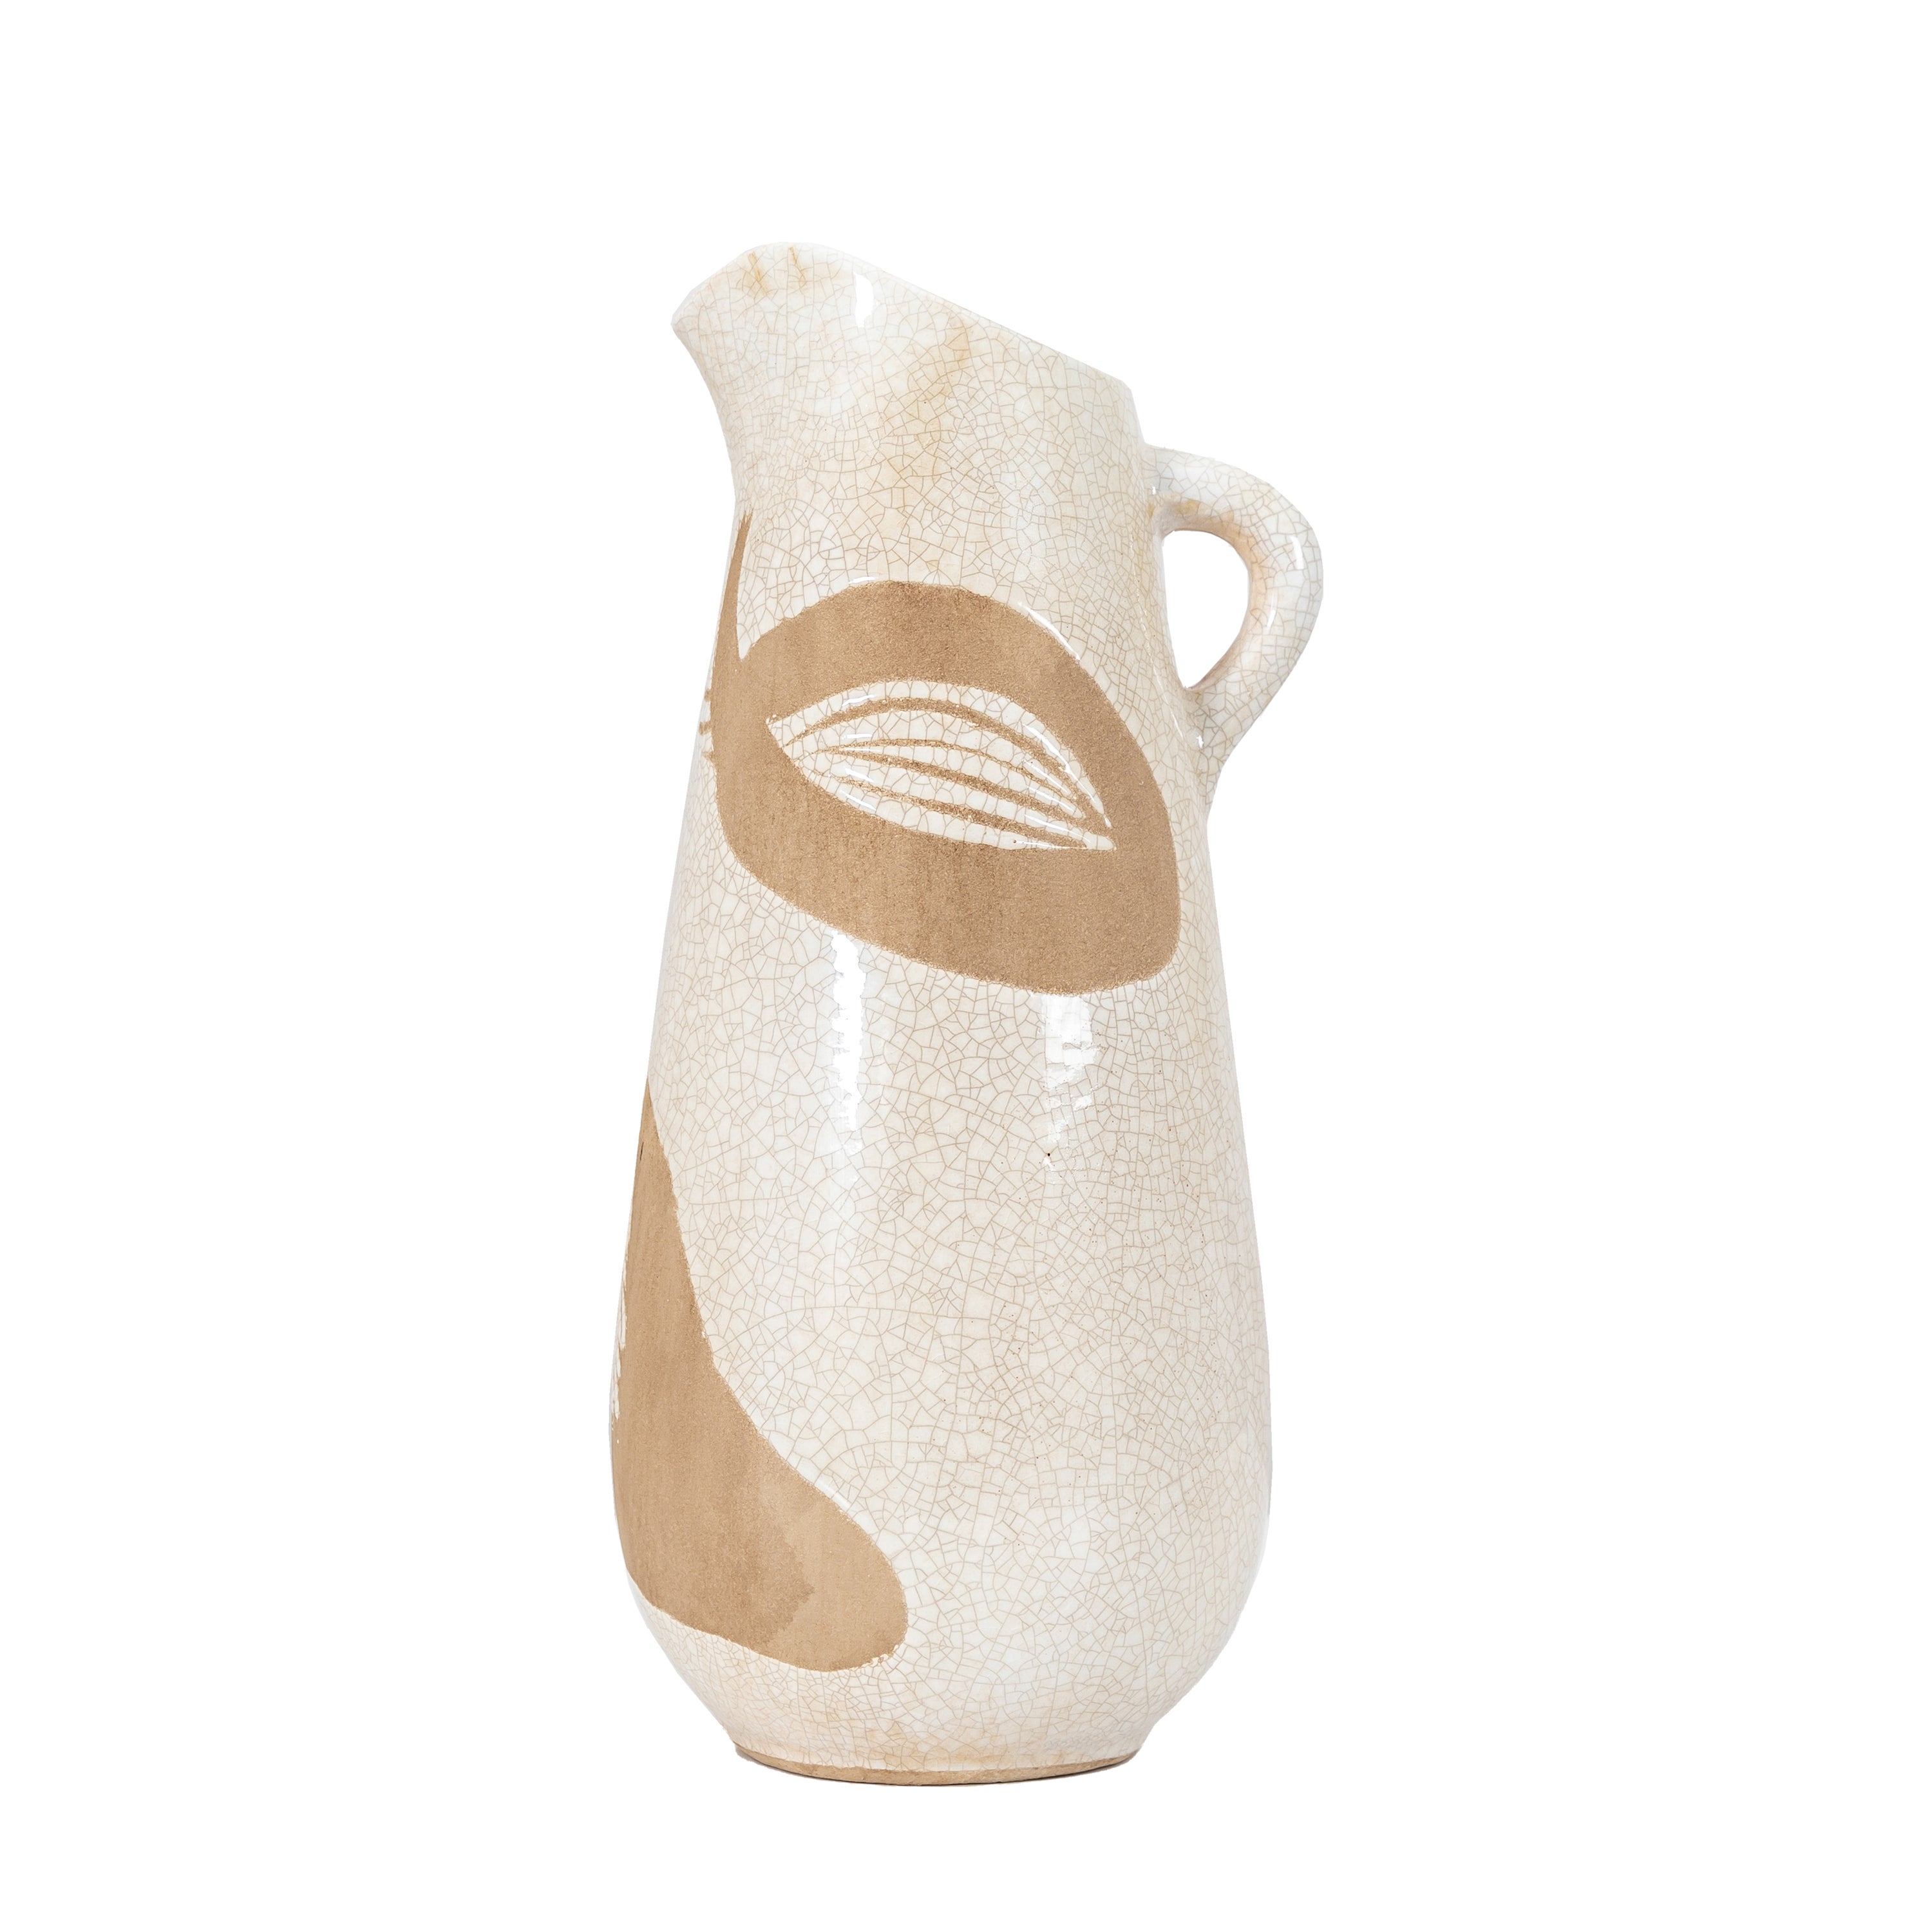 Colly Reactive Striped Stoneware Jug Vase